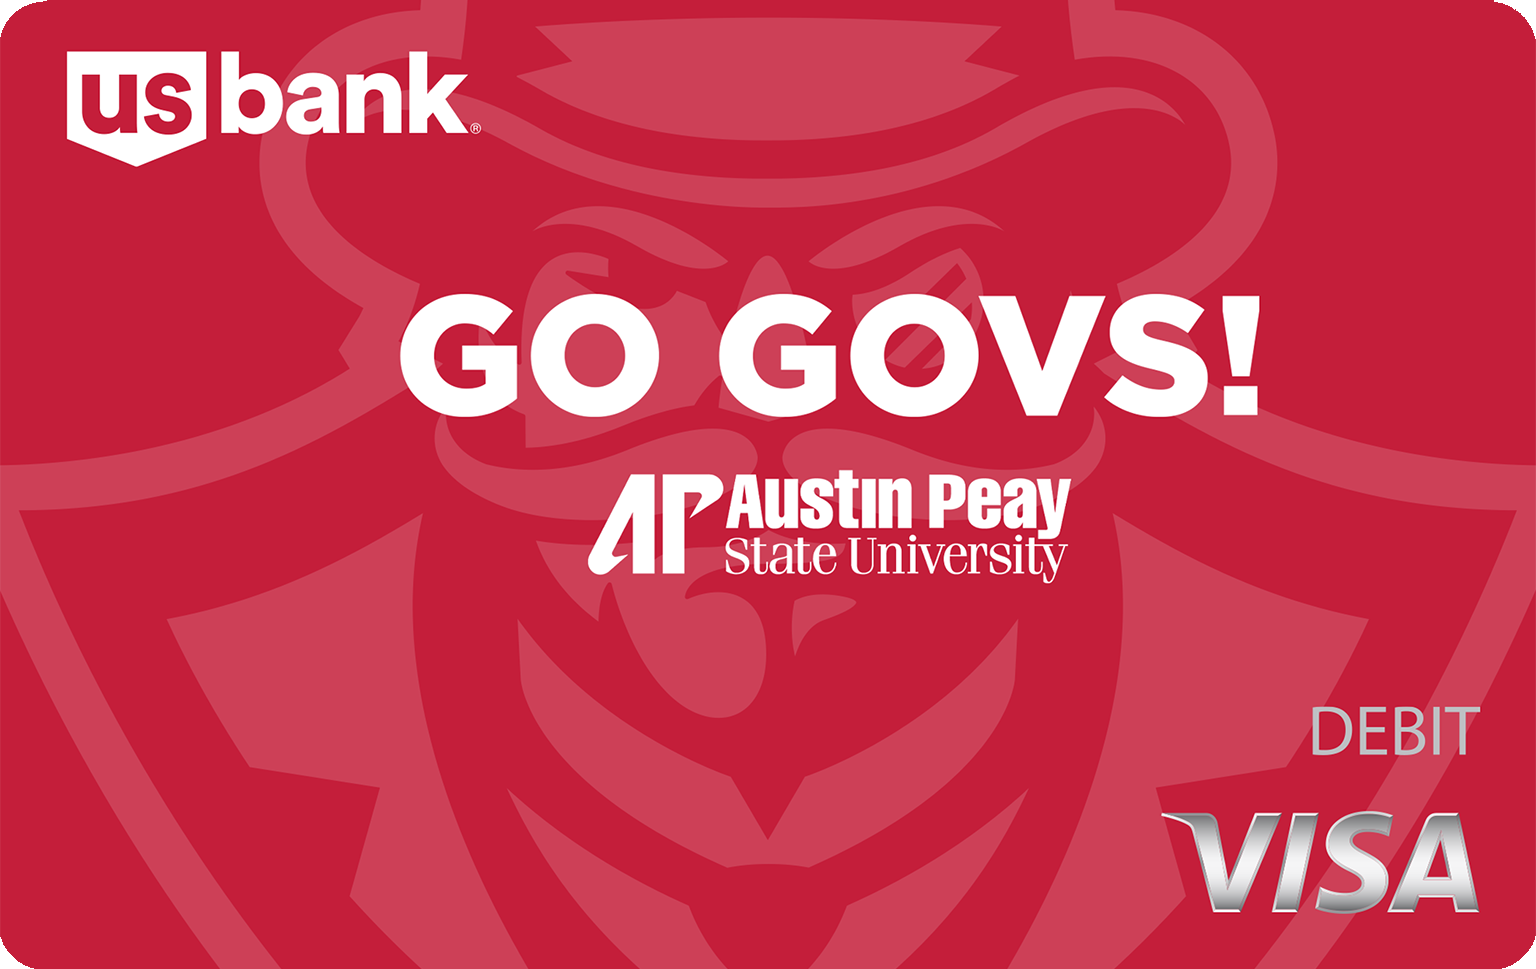 Austin Peay State University branded U.S. Bank Visa debit card